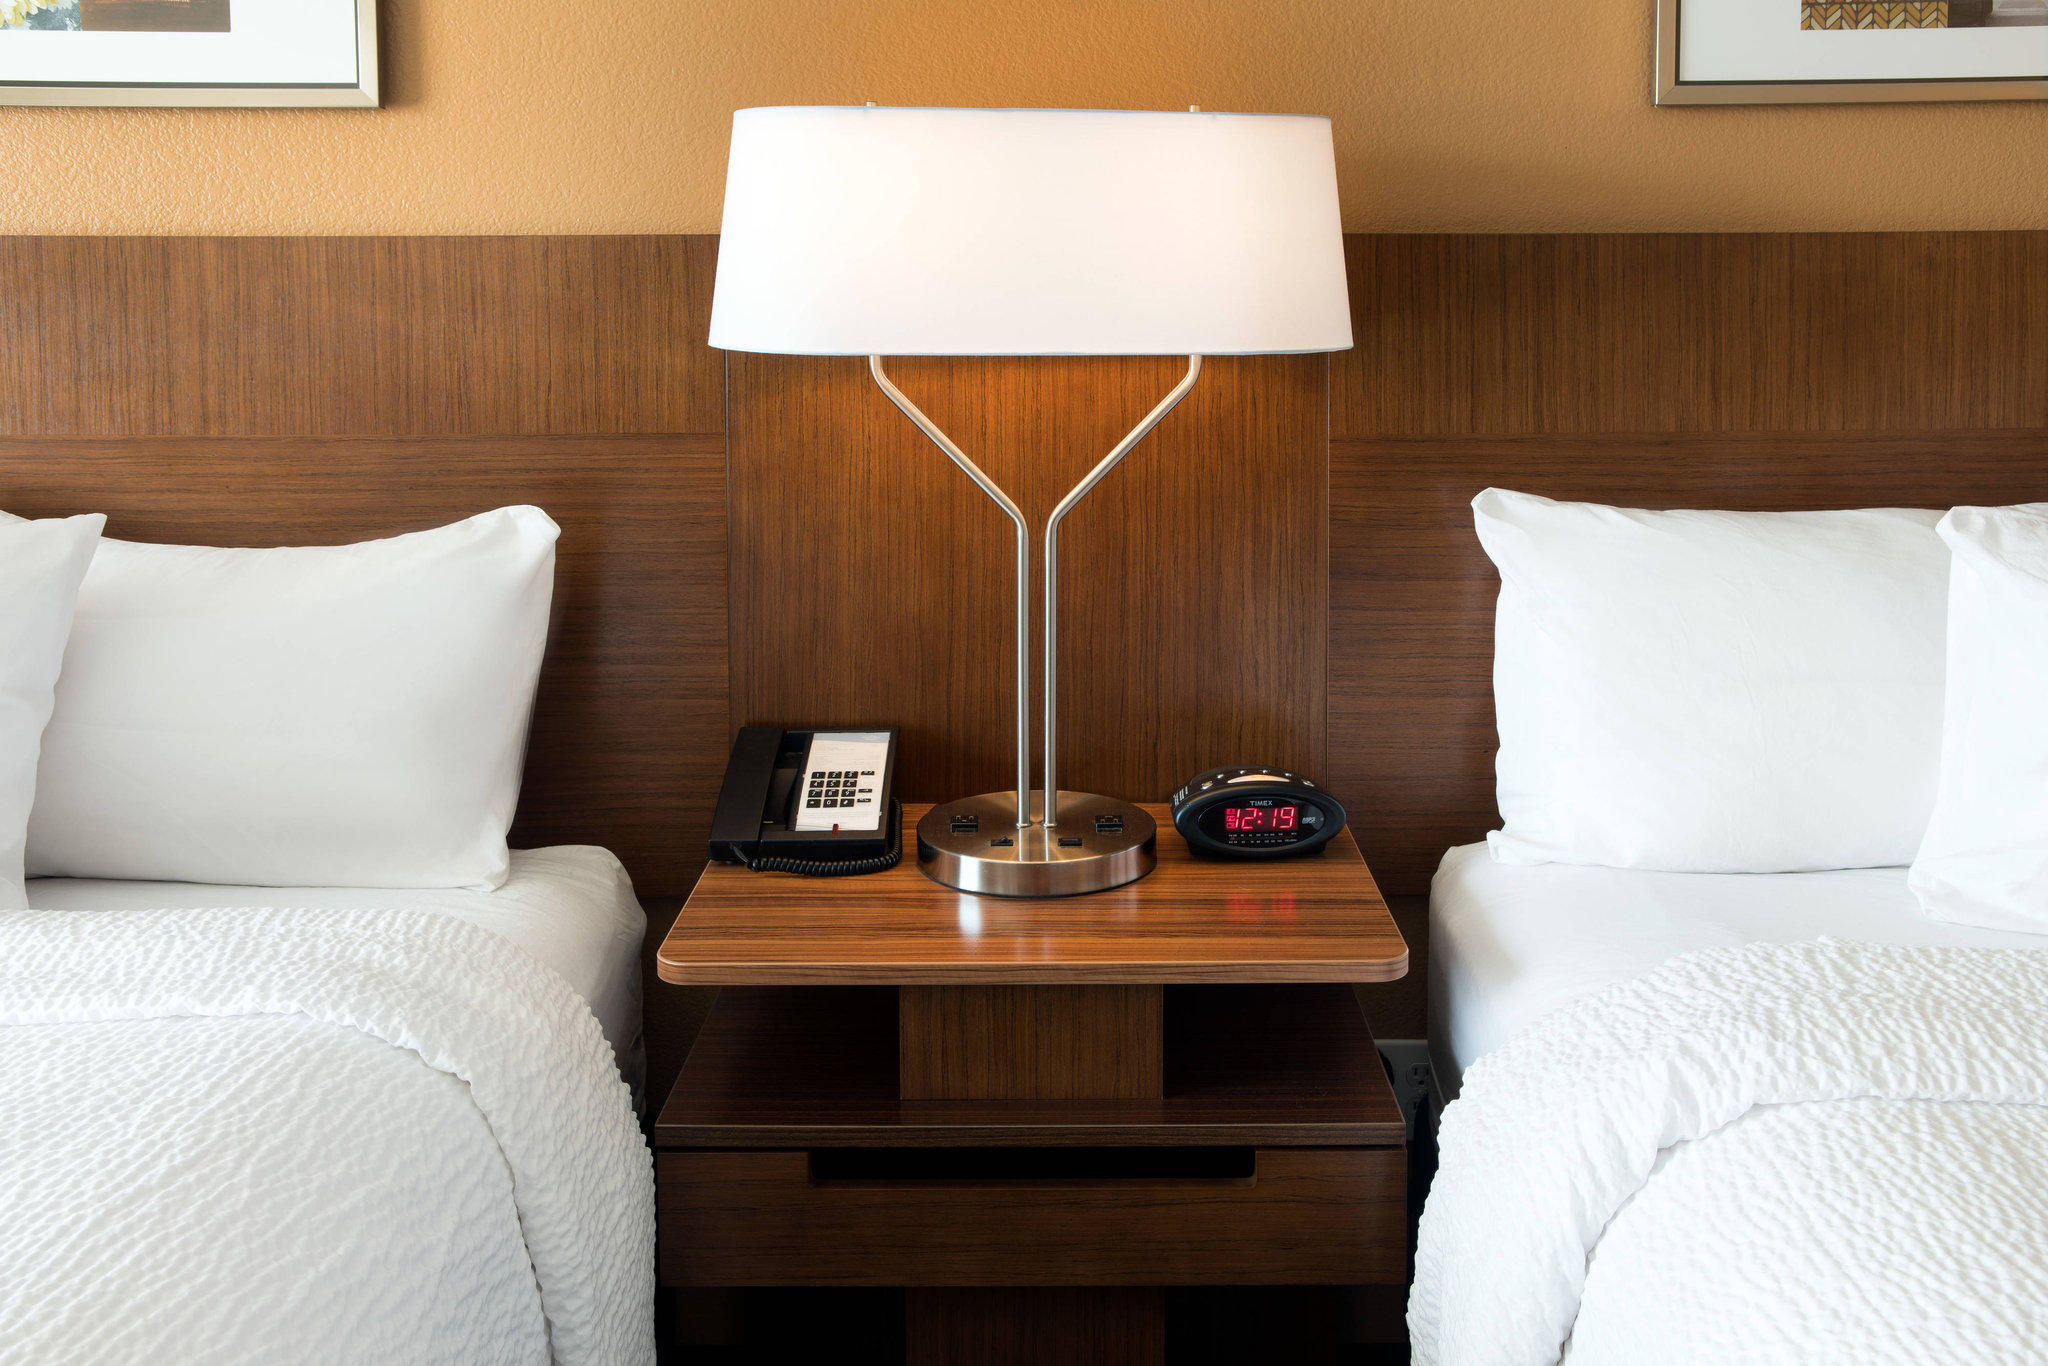 Fairfield Inn & Suites by Marriott Loveland Fort Collins Photo